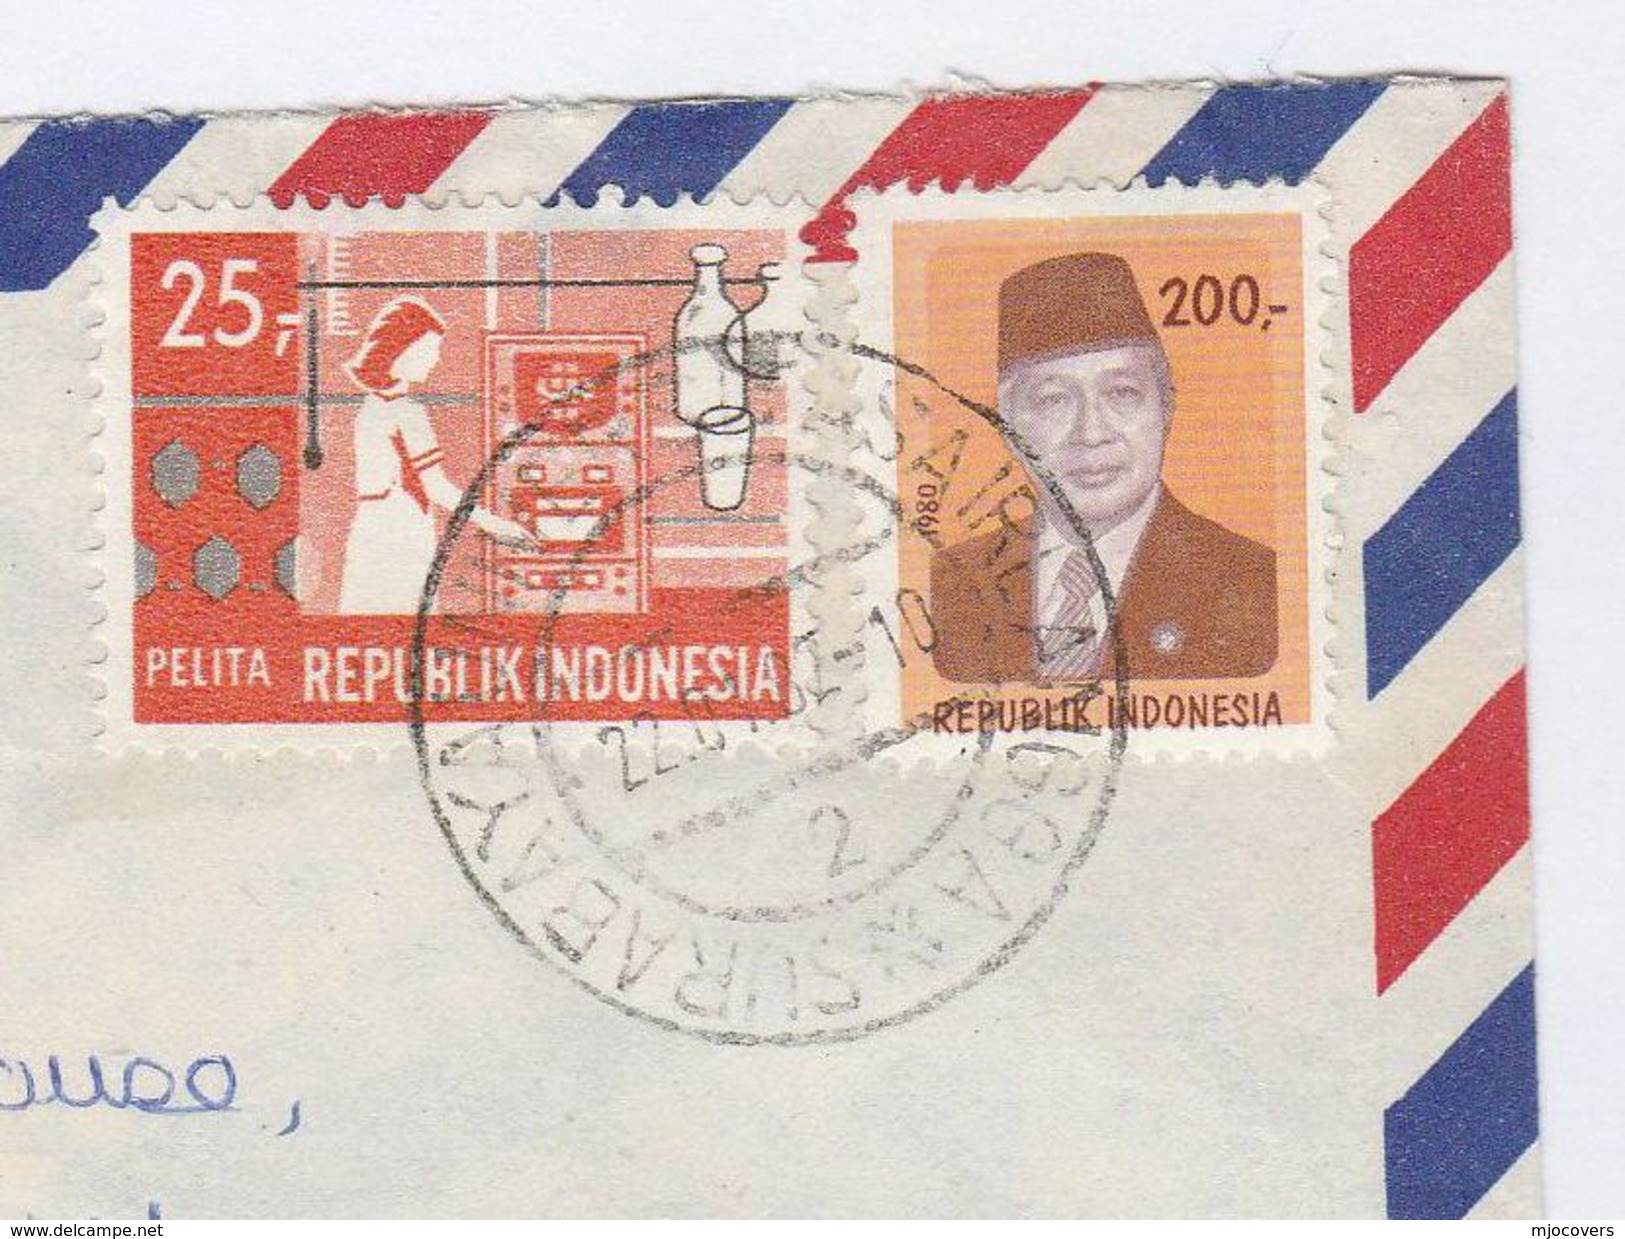 1982 INDONESIA SURABAYA UNIVERSITY Pmk COVER Stamps - Indonesia